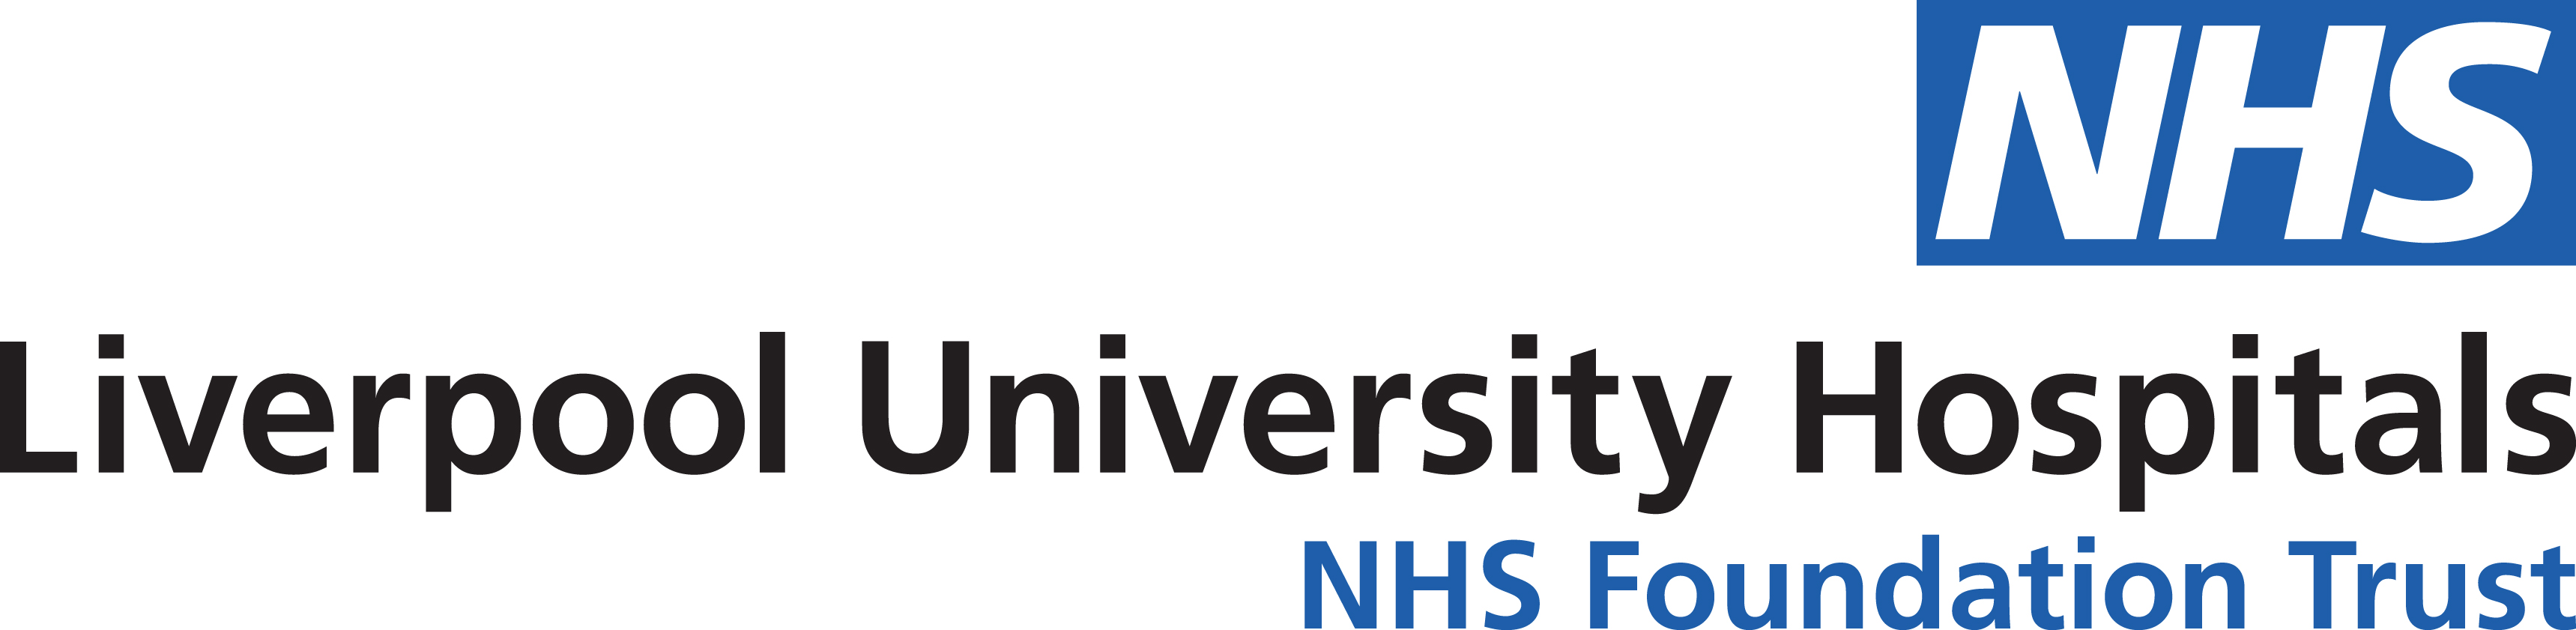 Liverpool University Hospital NHS Foundation Trust